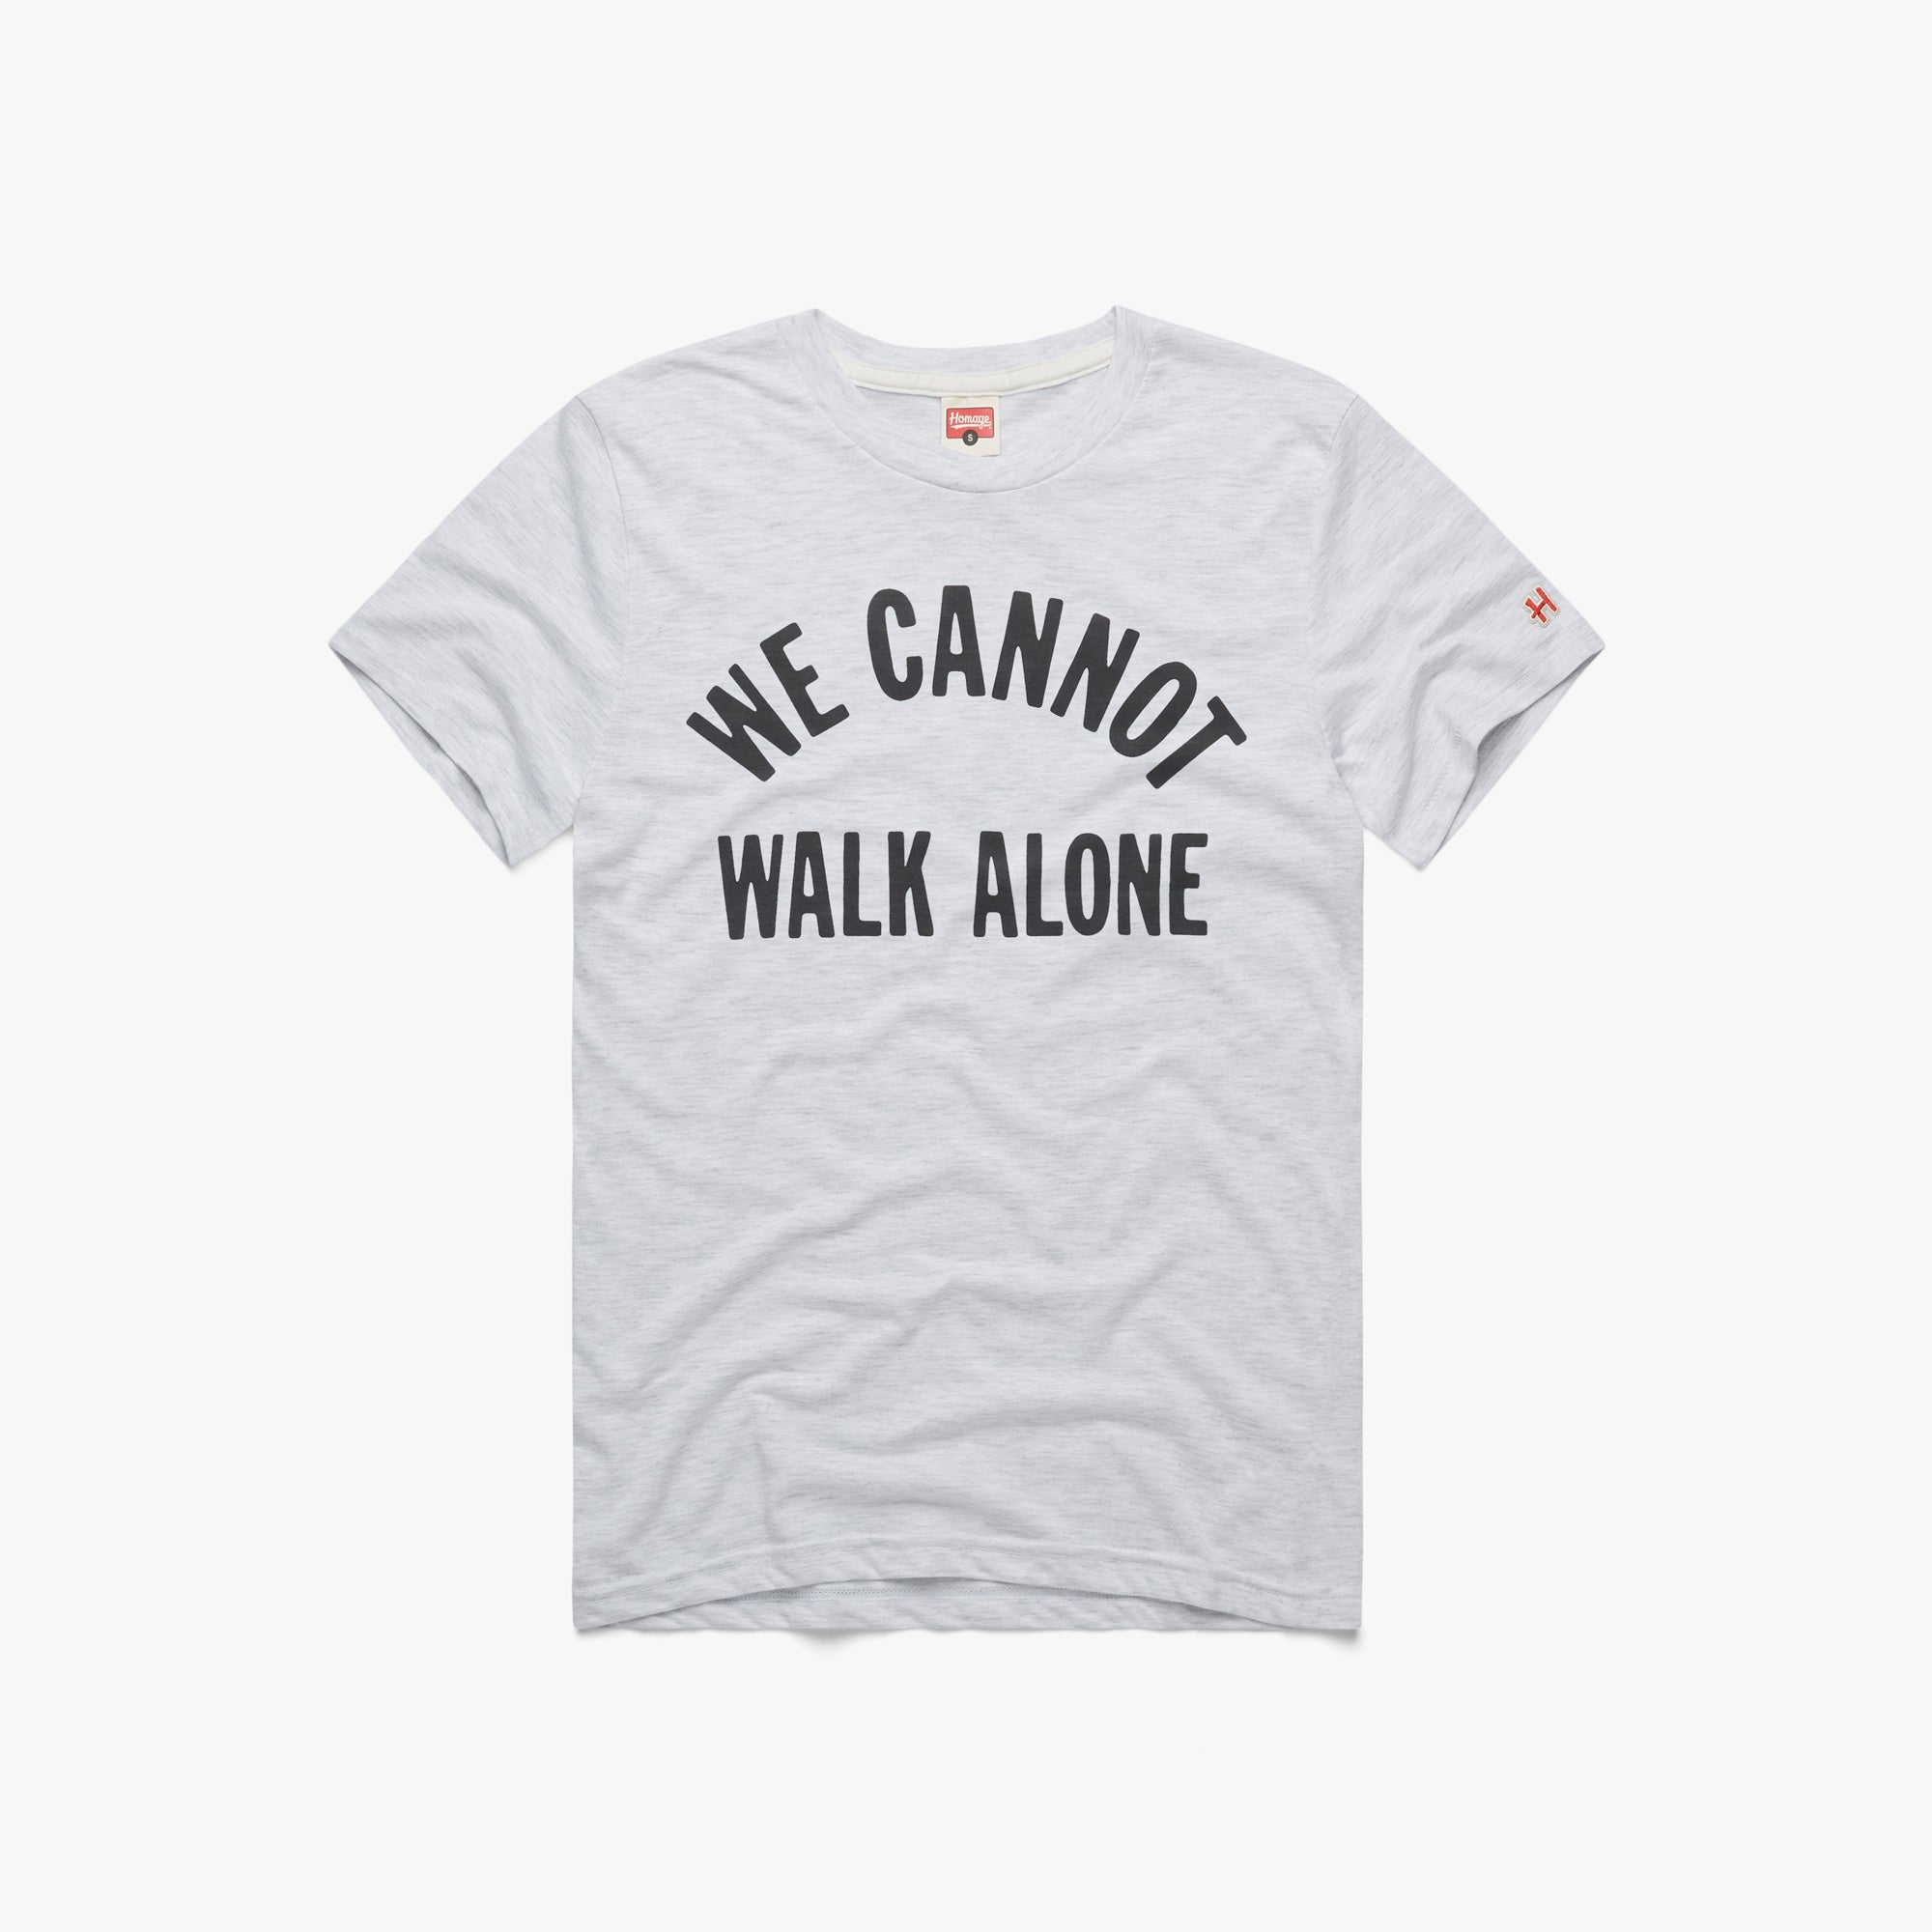 we cannot walk alone shirt